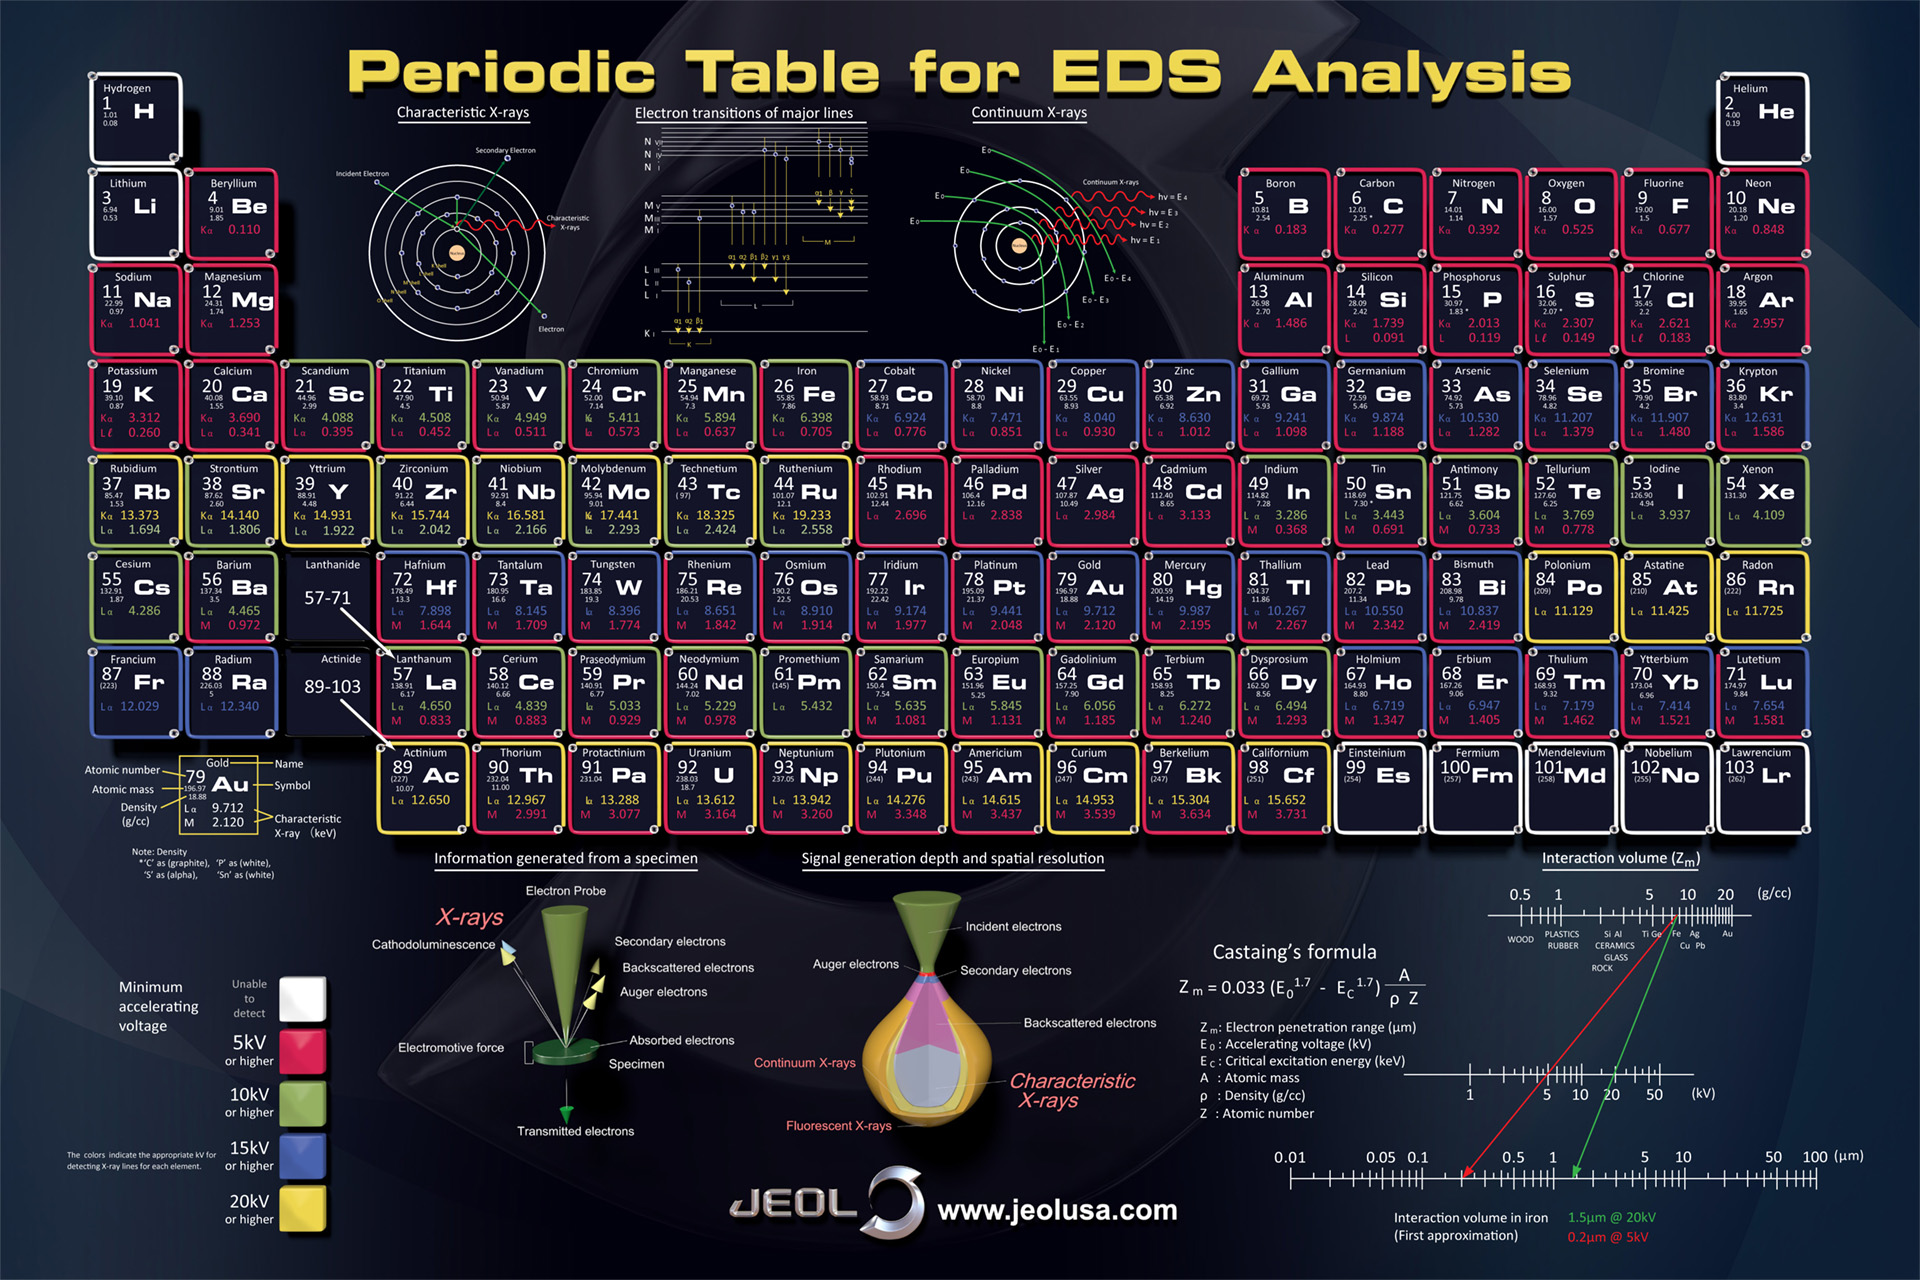 JEOL EDS Periodic Table